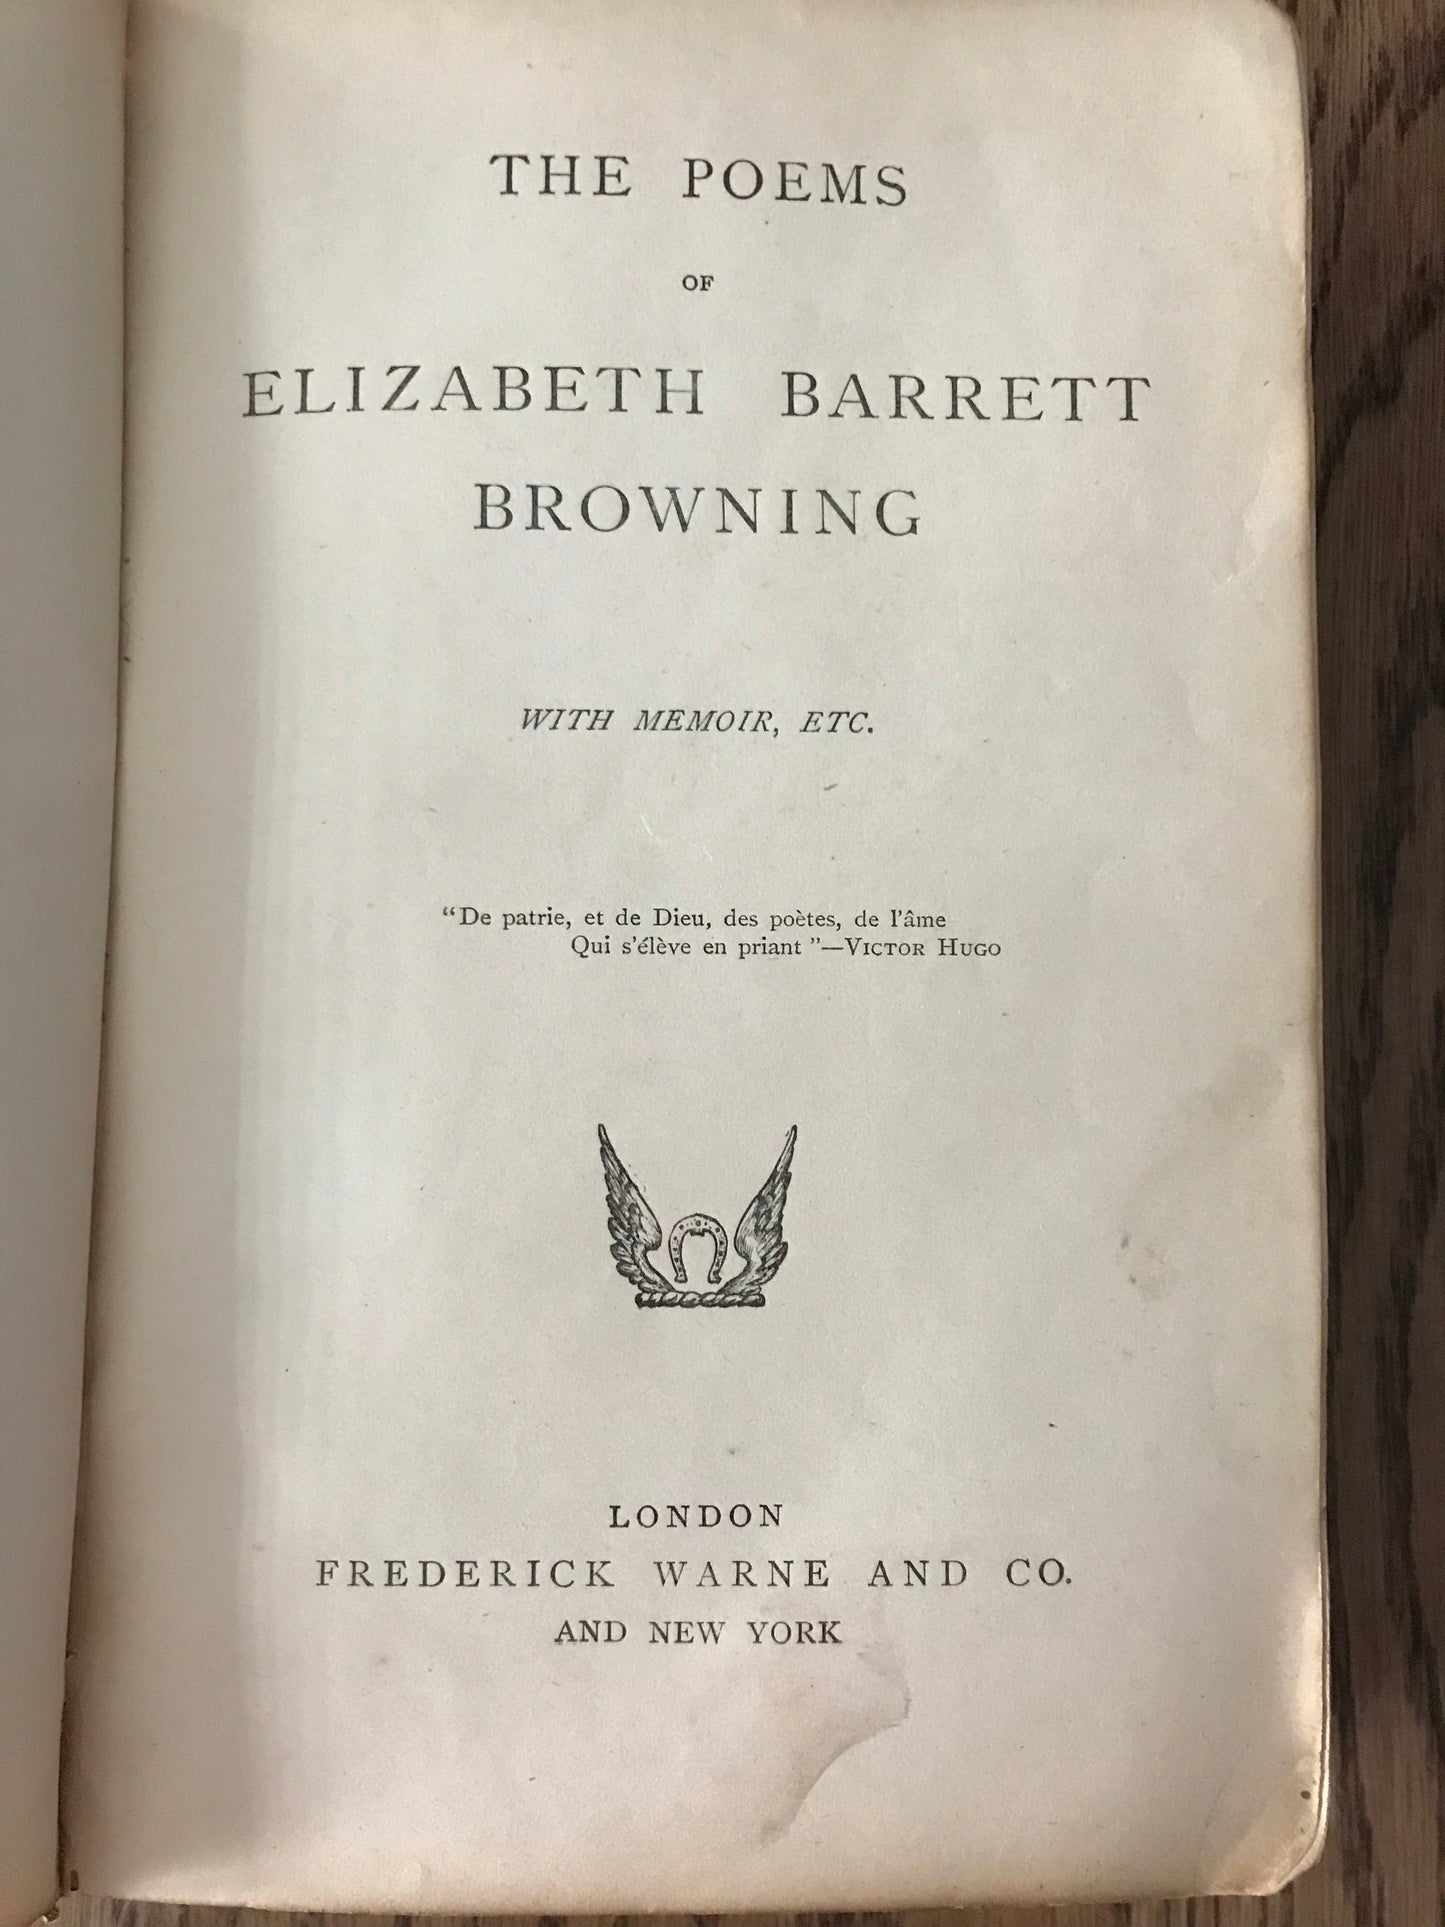 THE POEMS OF ELIZABETH BARRETT BROWNING - BY ELIZABETH BARRETT BROWNING BooksCardsNBikes